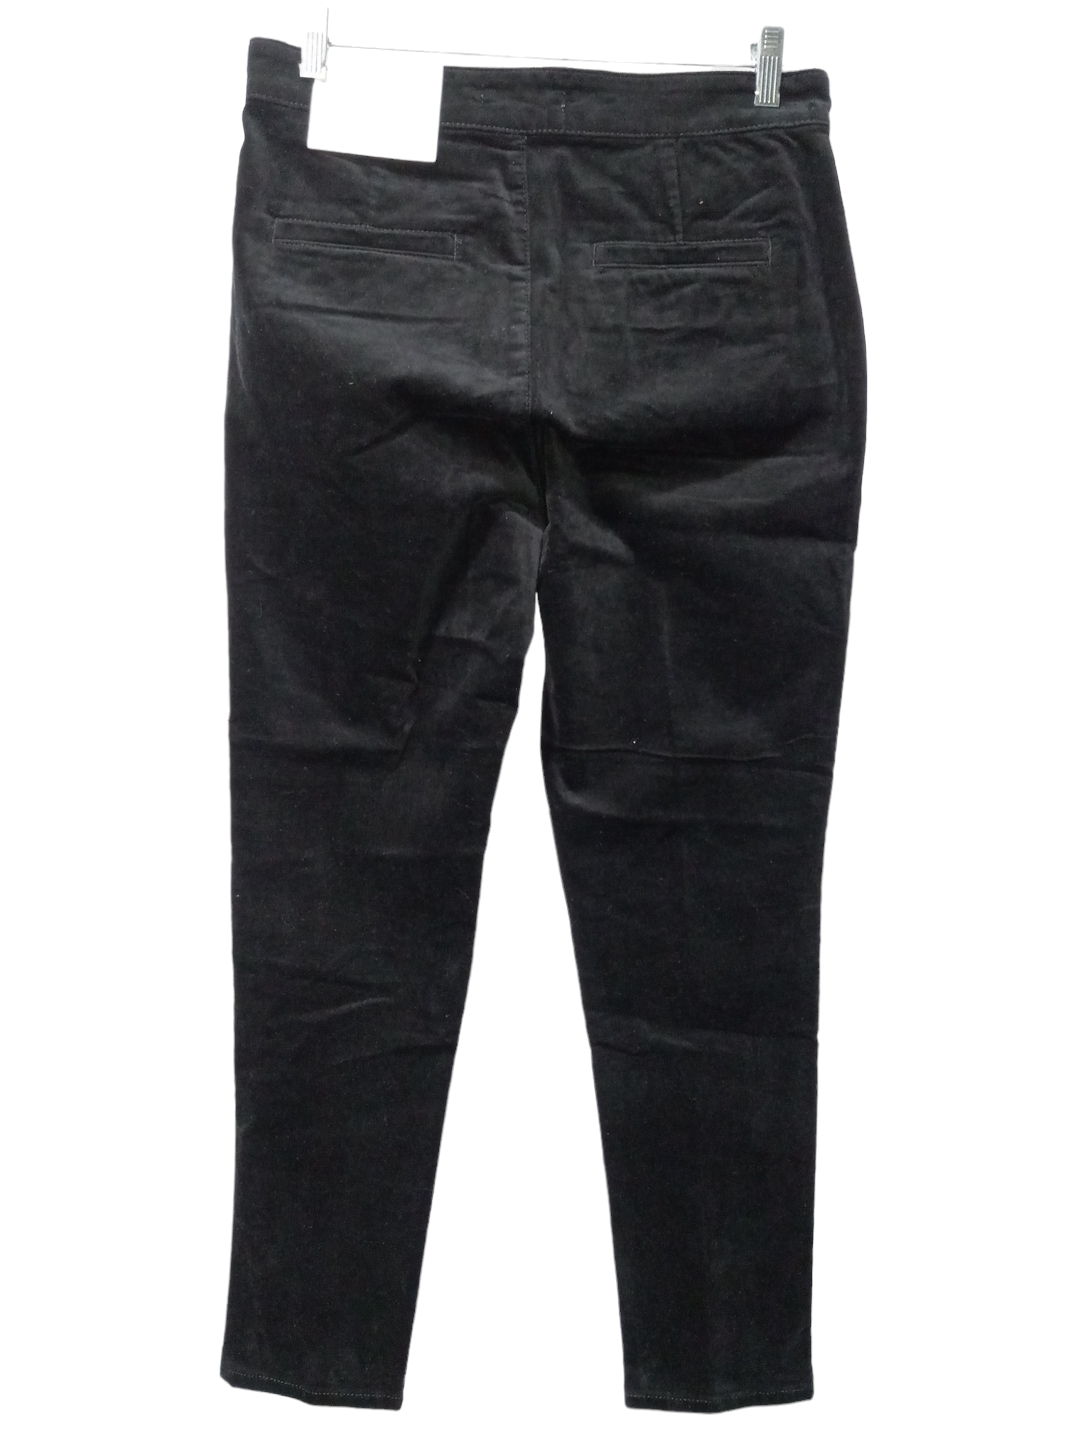 Black Pants Corduroy Loft, Size 9